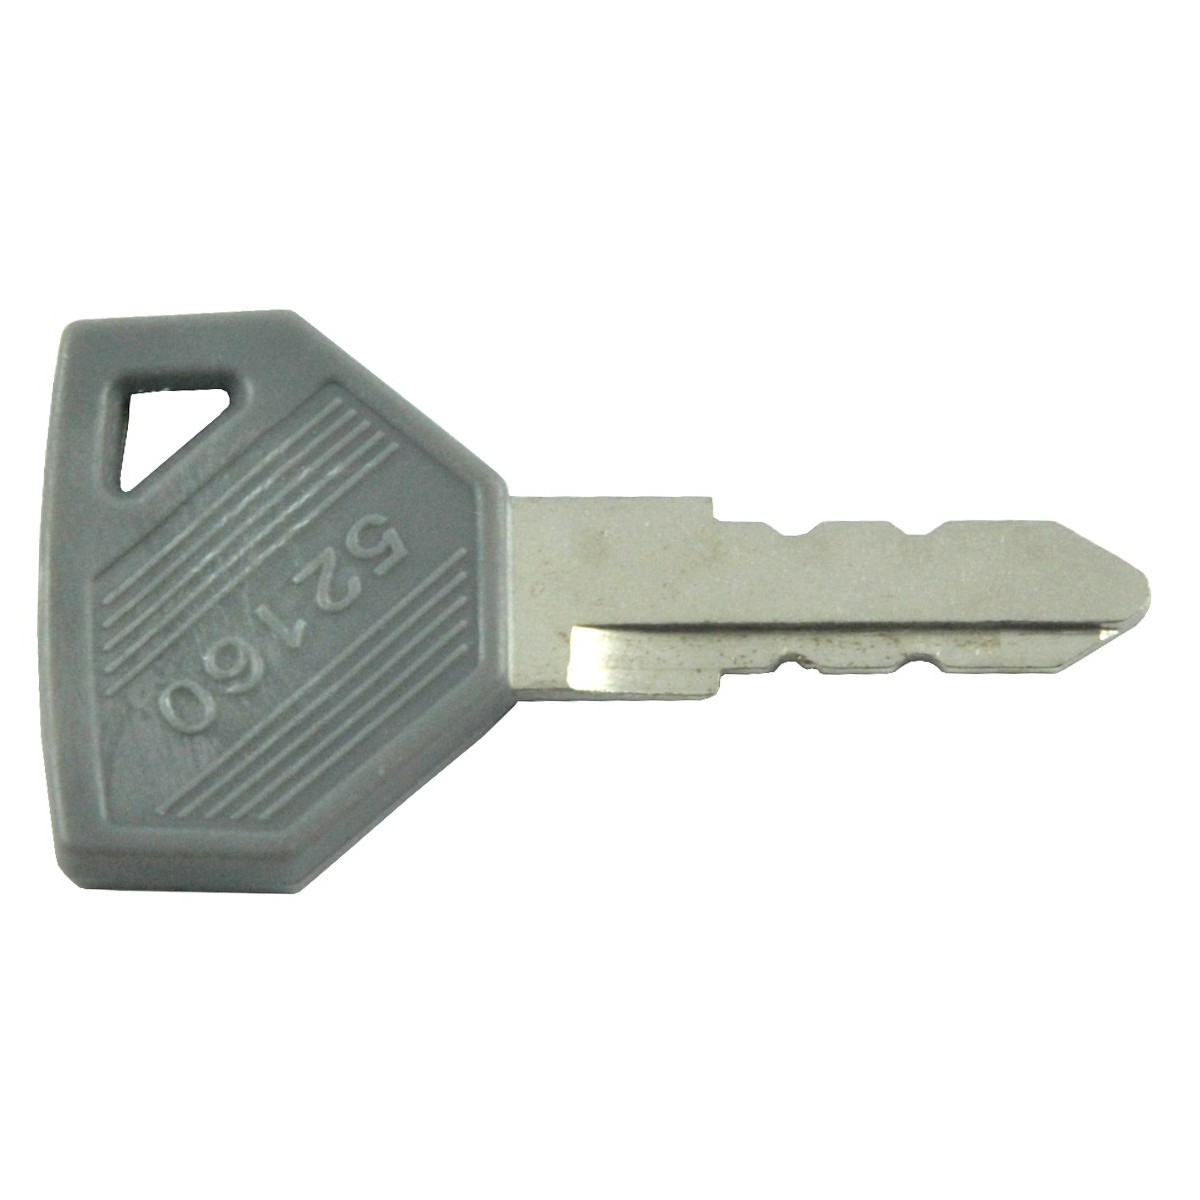 Schlüssel 52160 für Yanmar AF, F, FX, Ke-3, Ke-2 Zündung